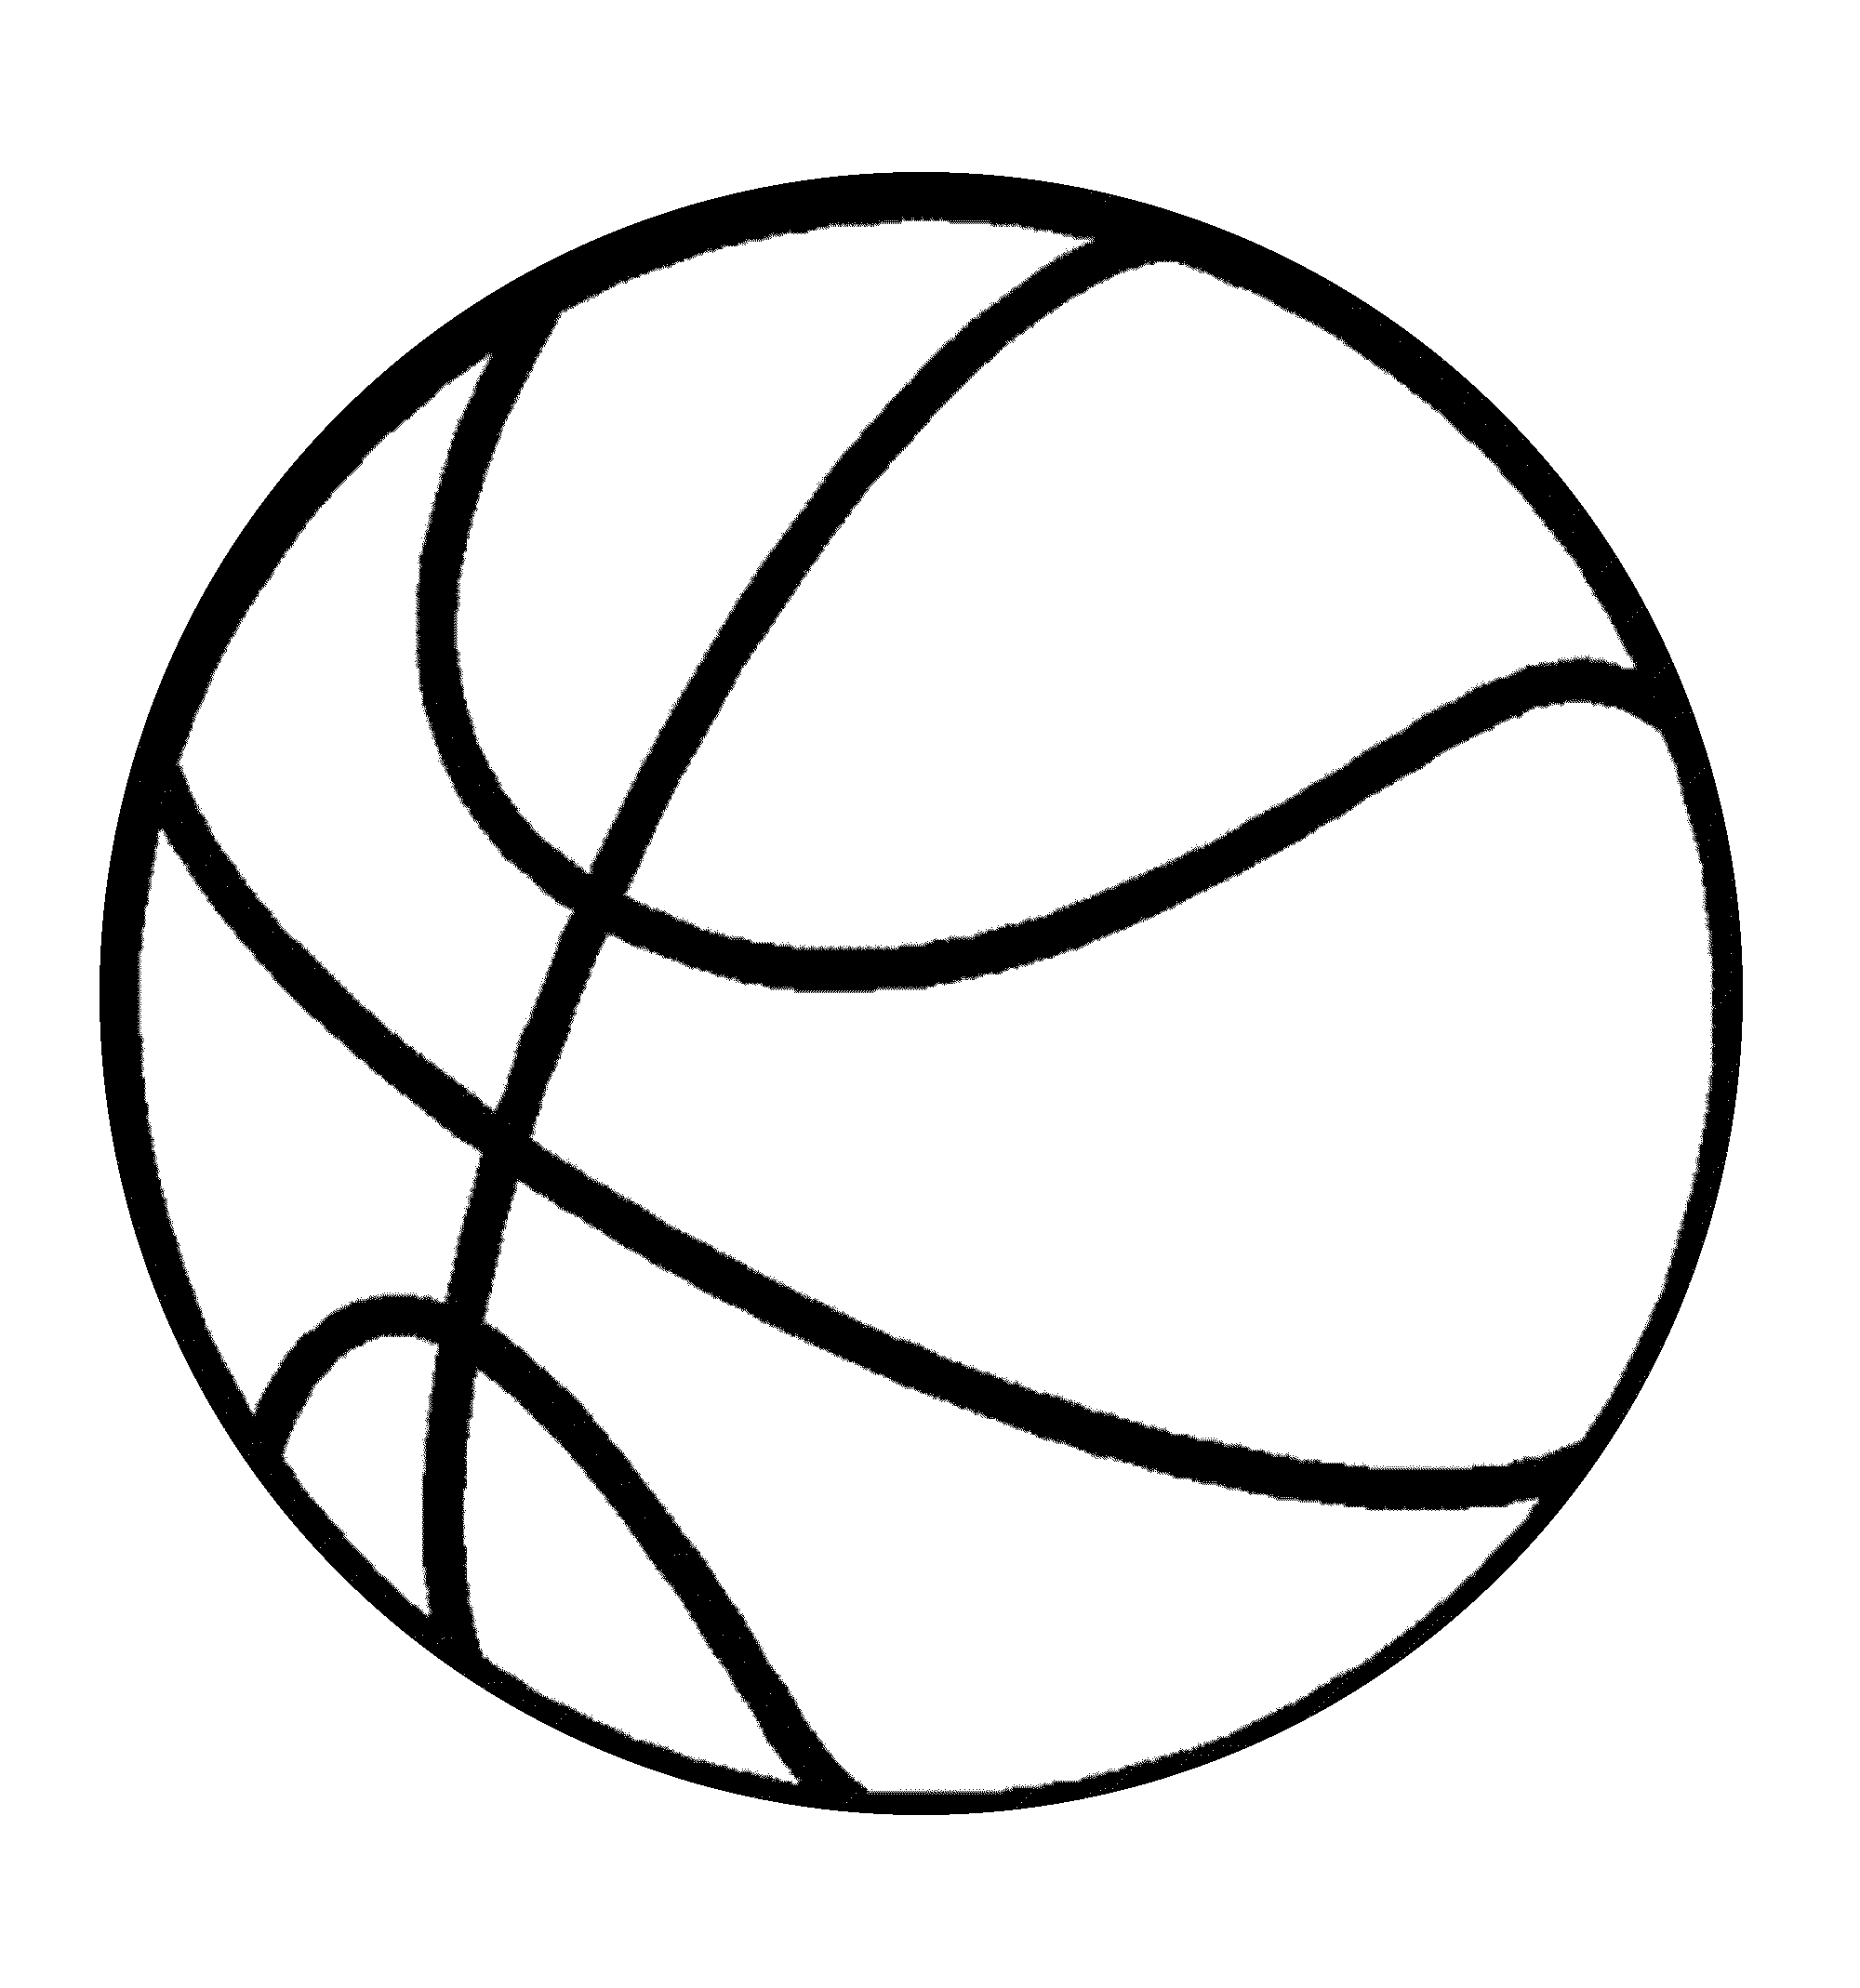 Image #17091 - Coloriage basketball gratuit